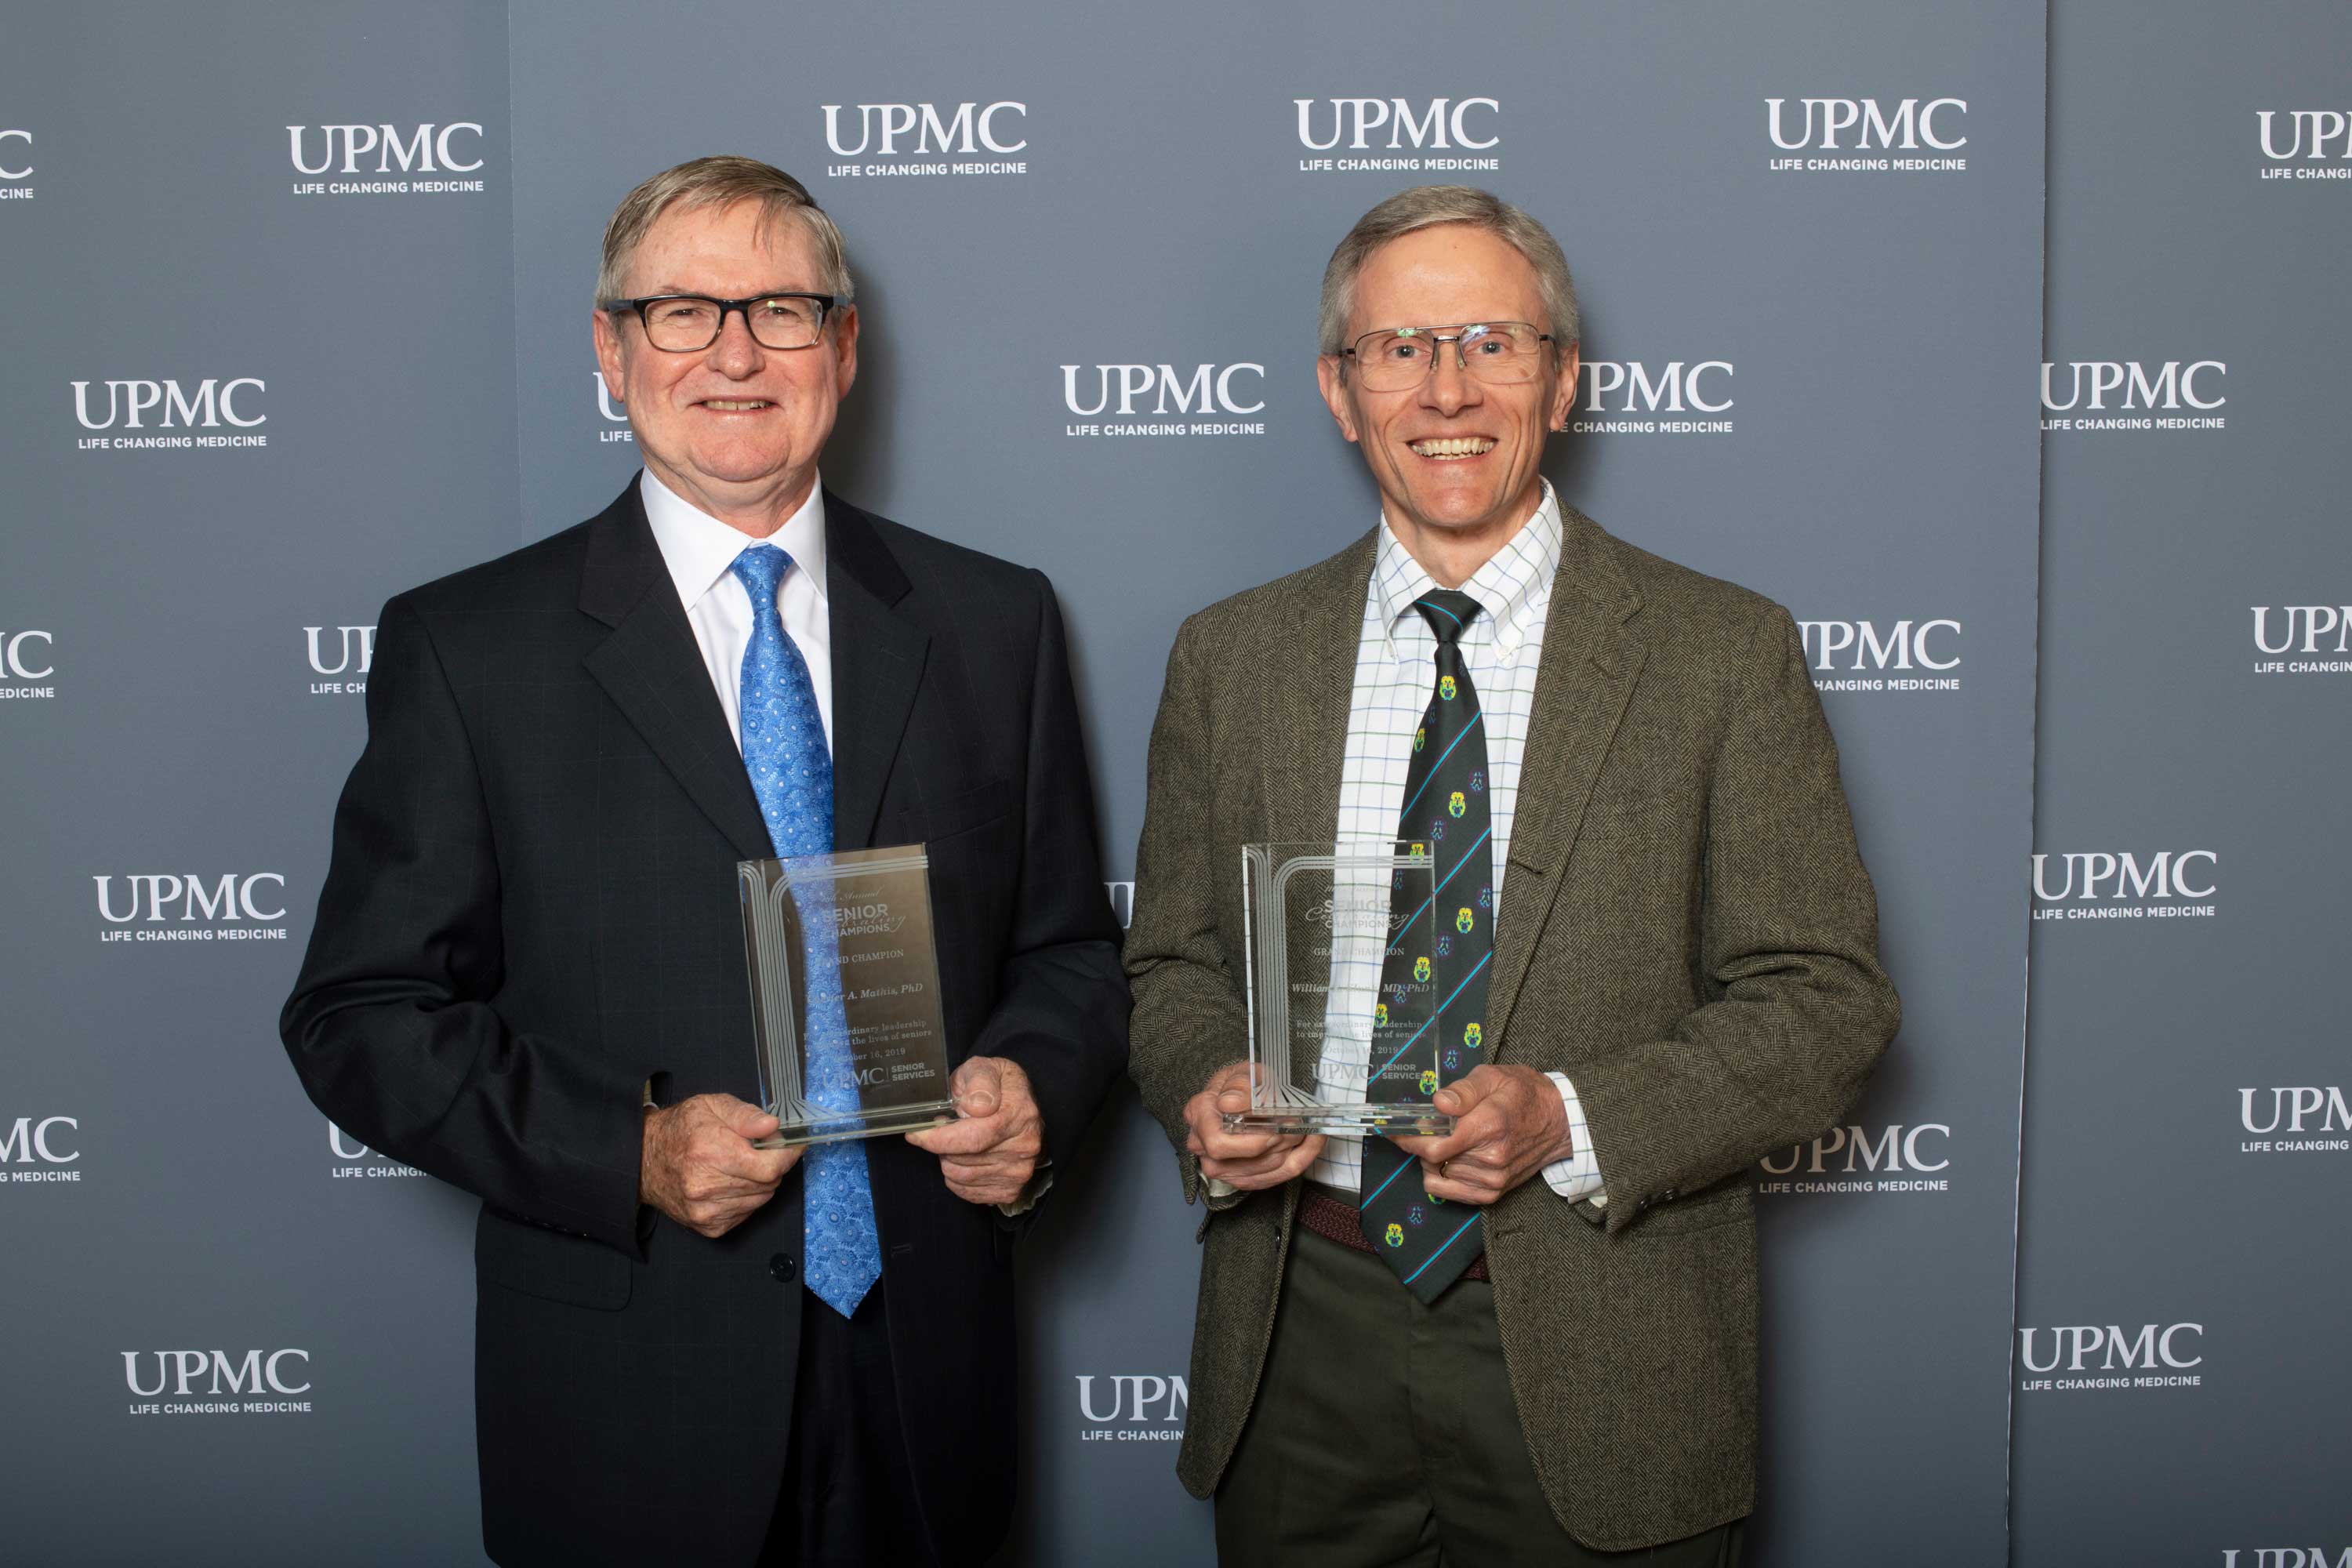 UPMC Senior Champions 2019 